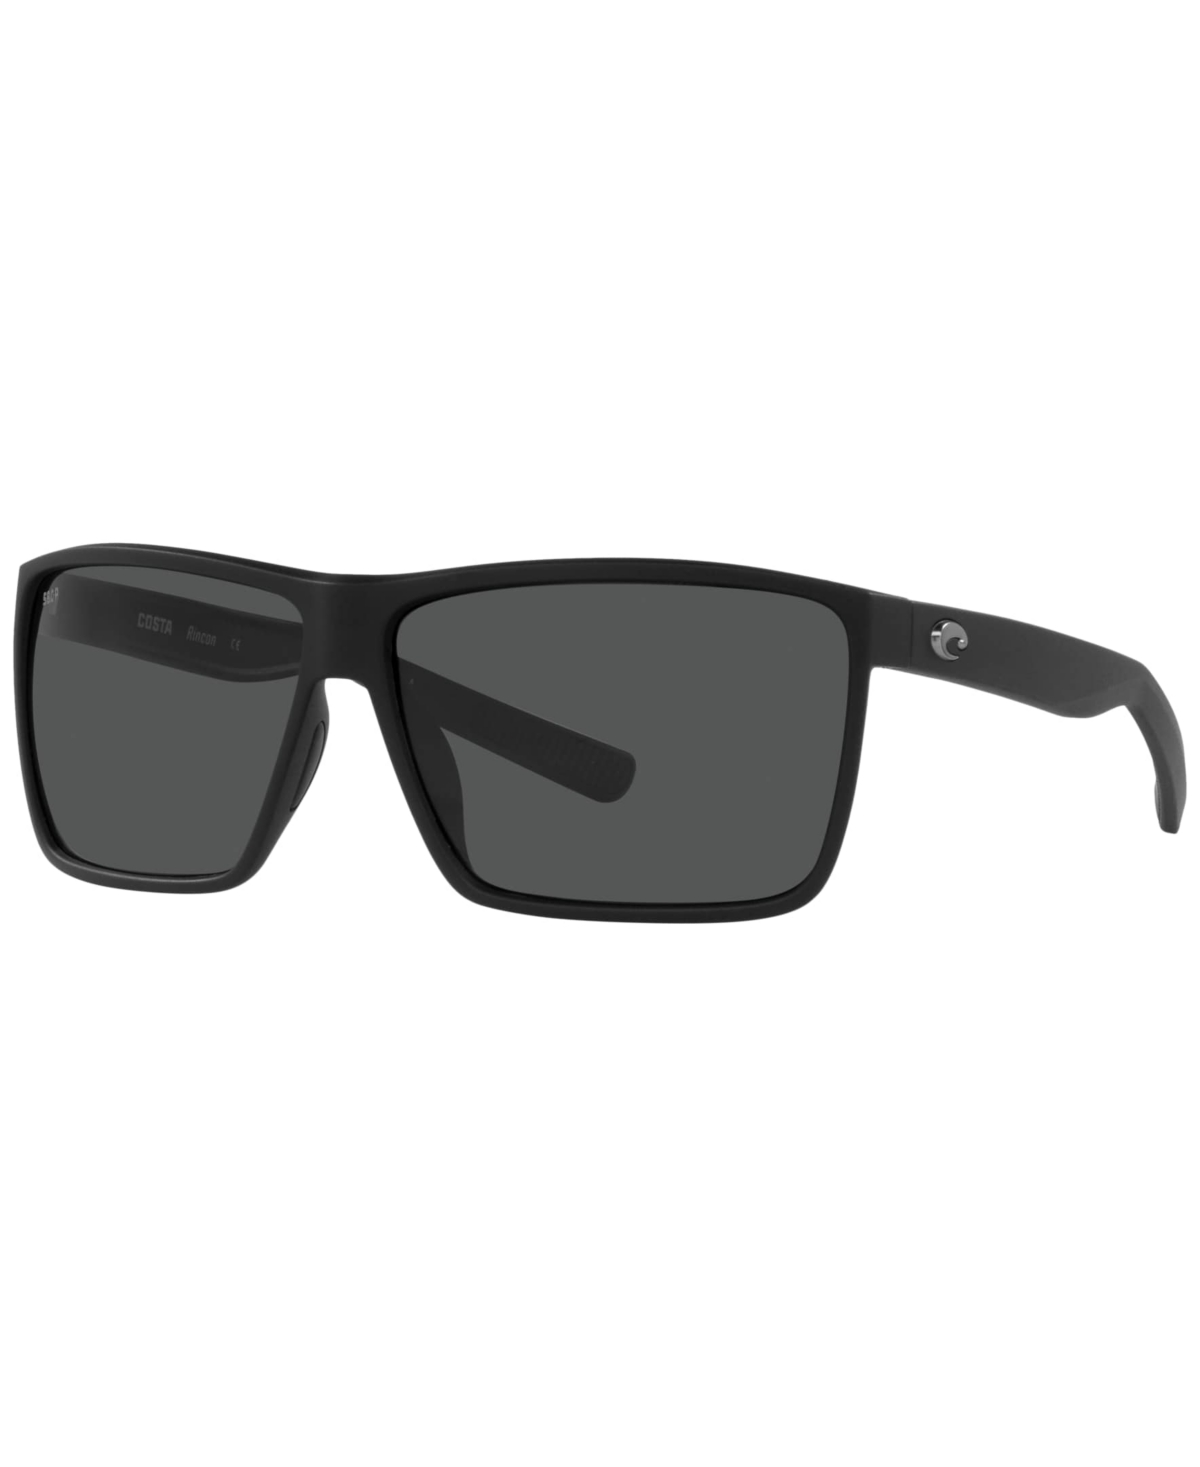 Men's Polarized Sunglasses, 6S9018 63 - Matte Black